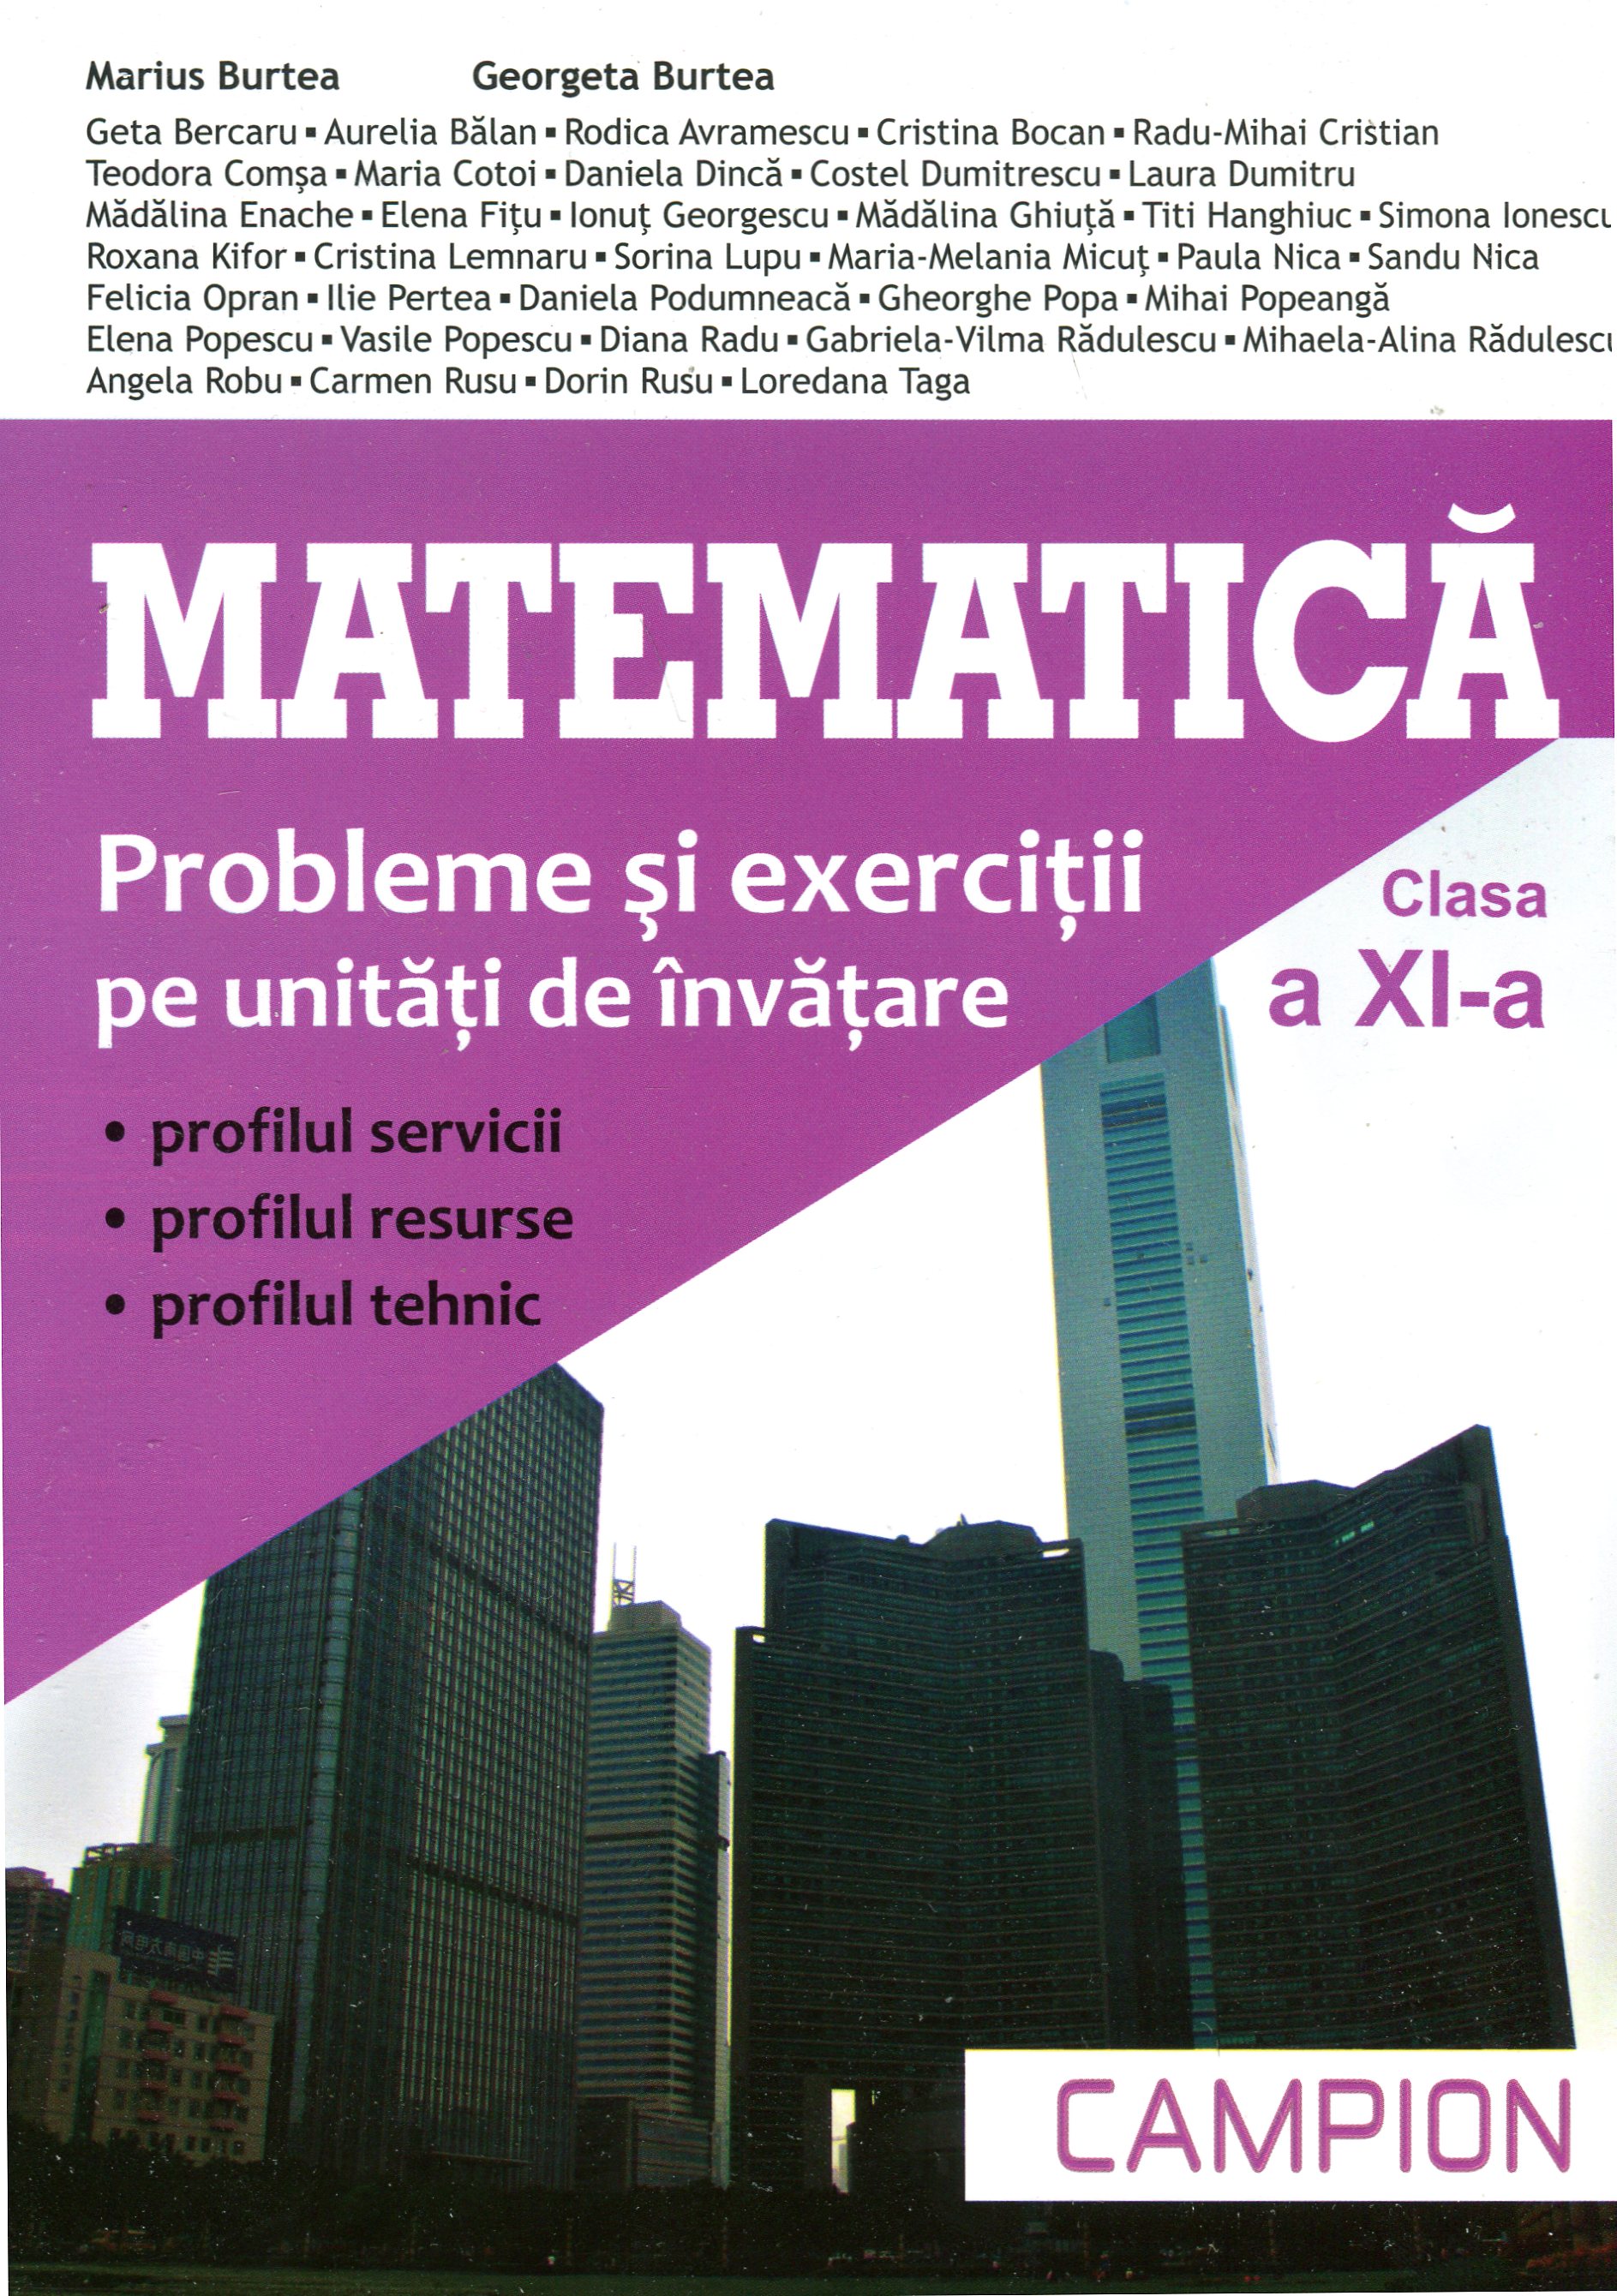 Matematica clasa a XI-a. Probleme si exercitii pe unitati de invatare - Marius Burtea, Georgeta Burtea